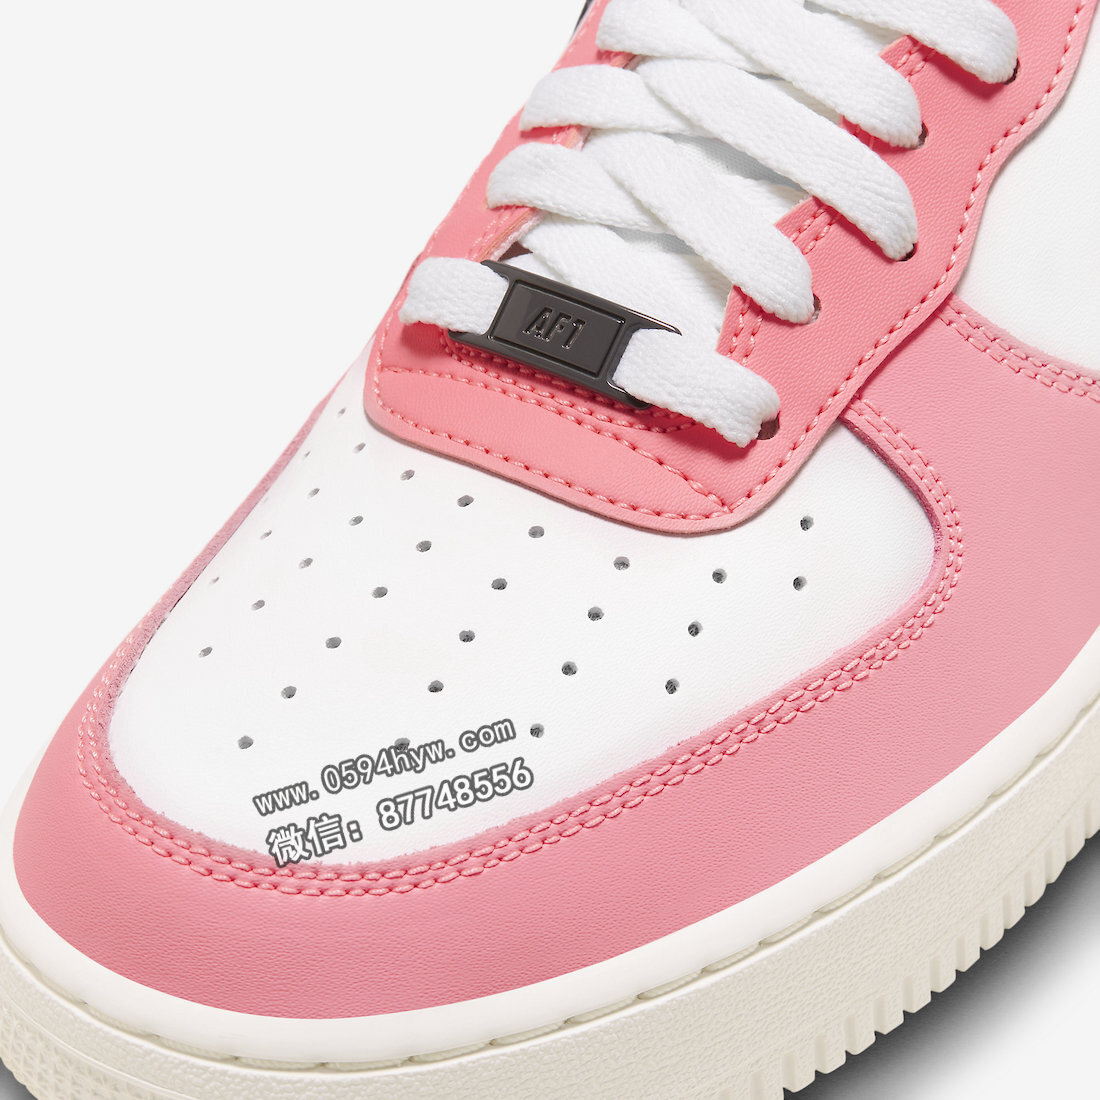 Nike-Air-Force-1-Low-Pink-Brown-FQ6850-621-6-1